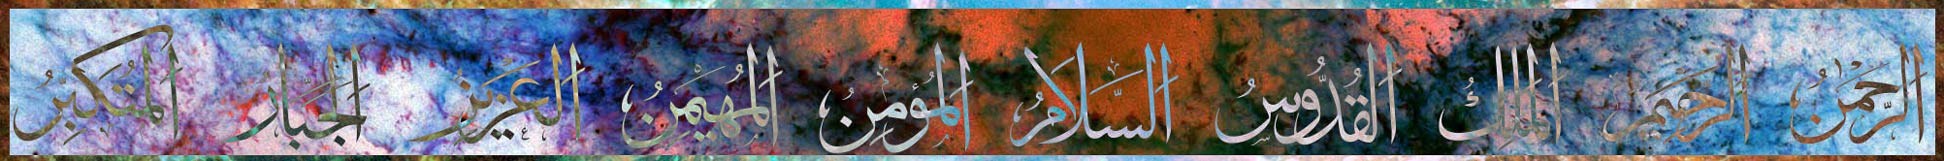 Islam calligraphy banner